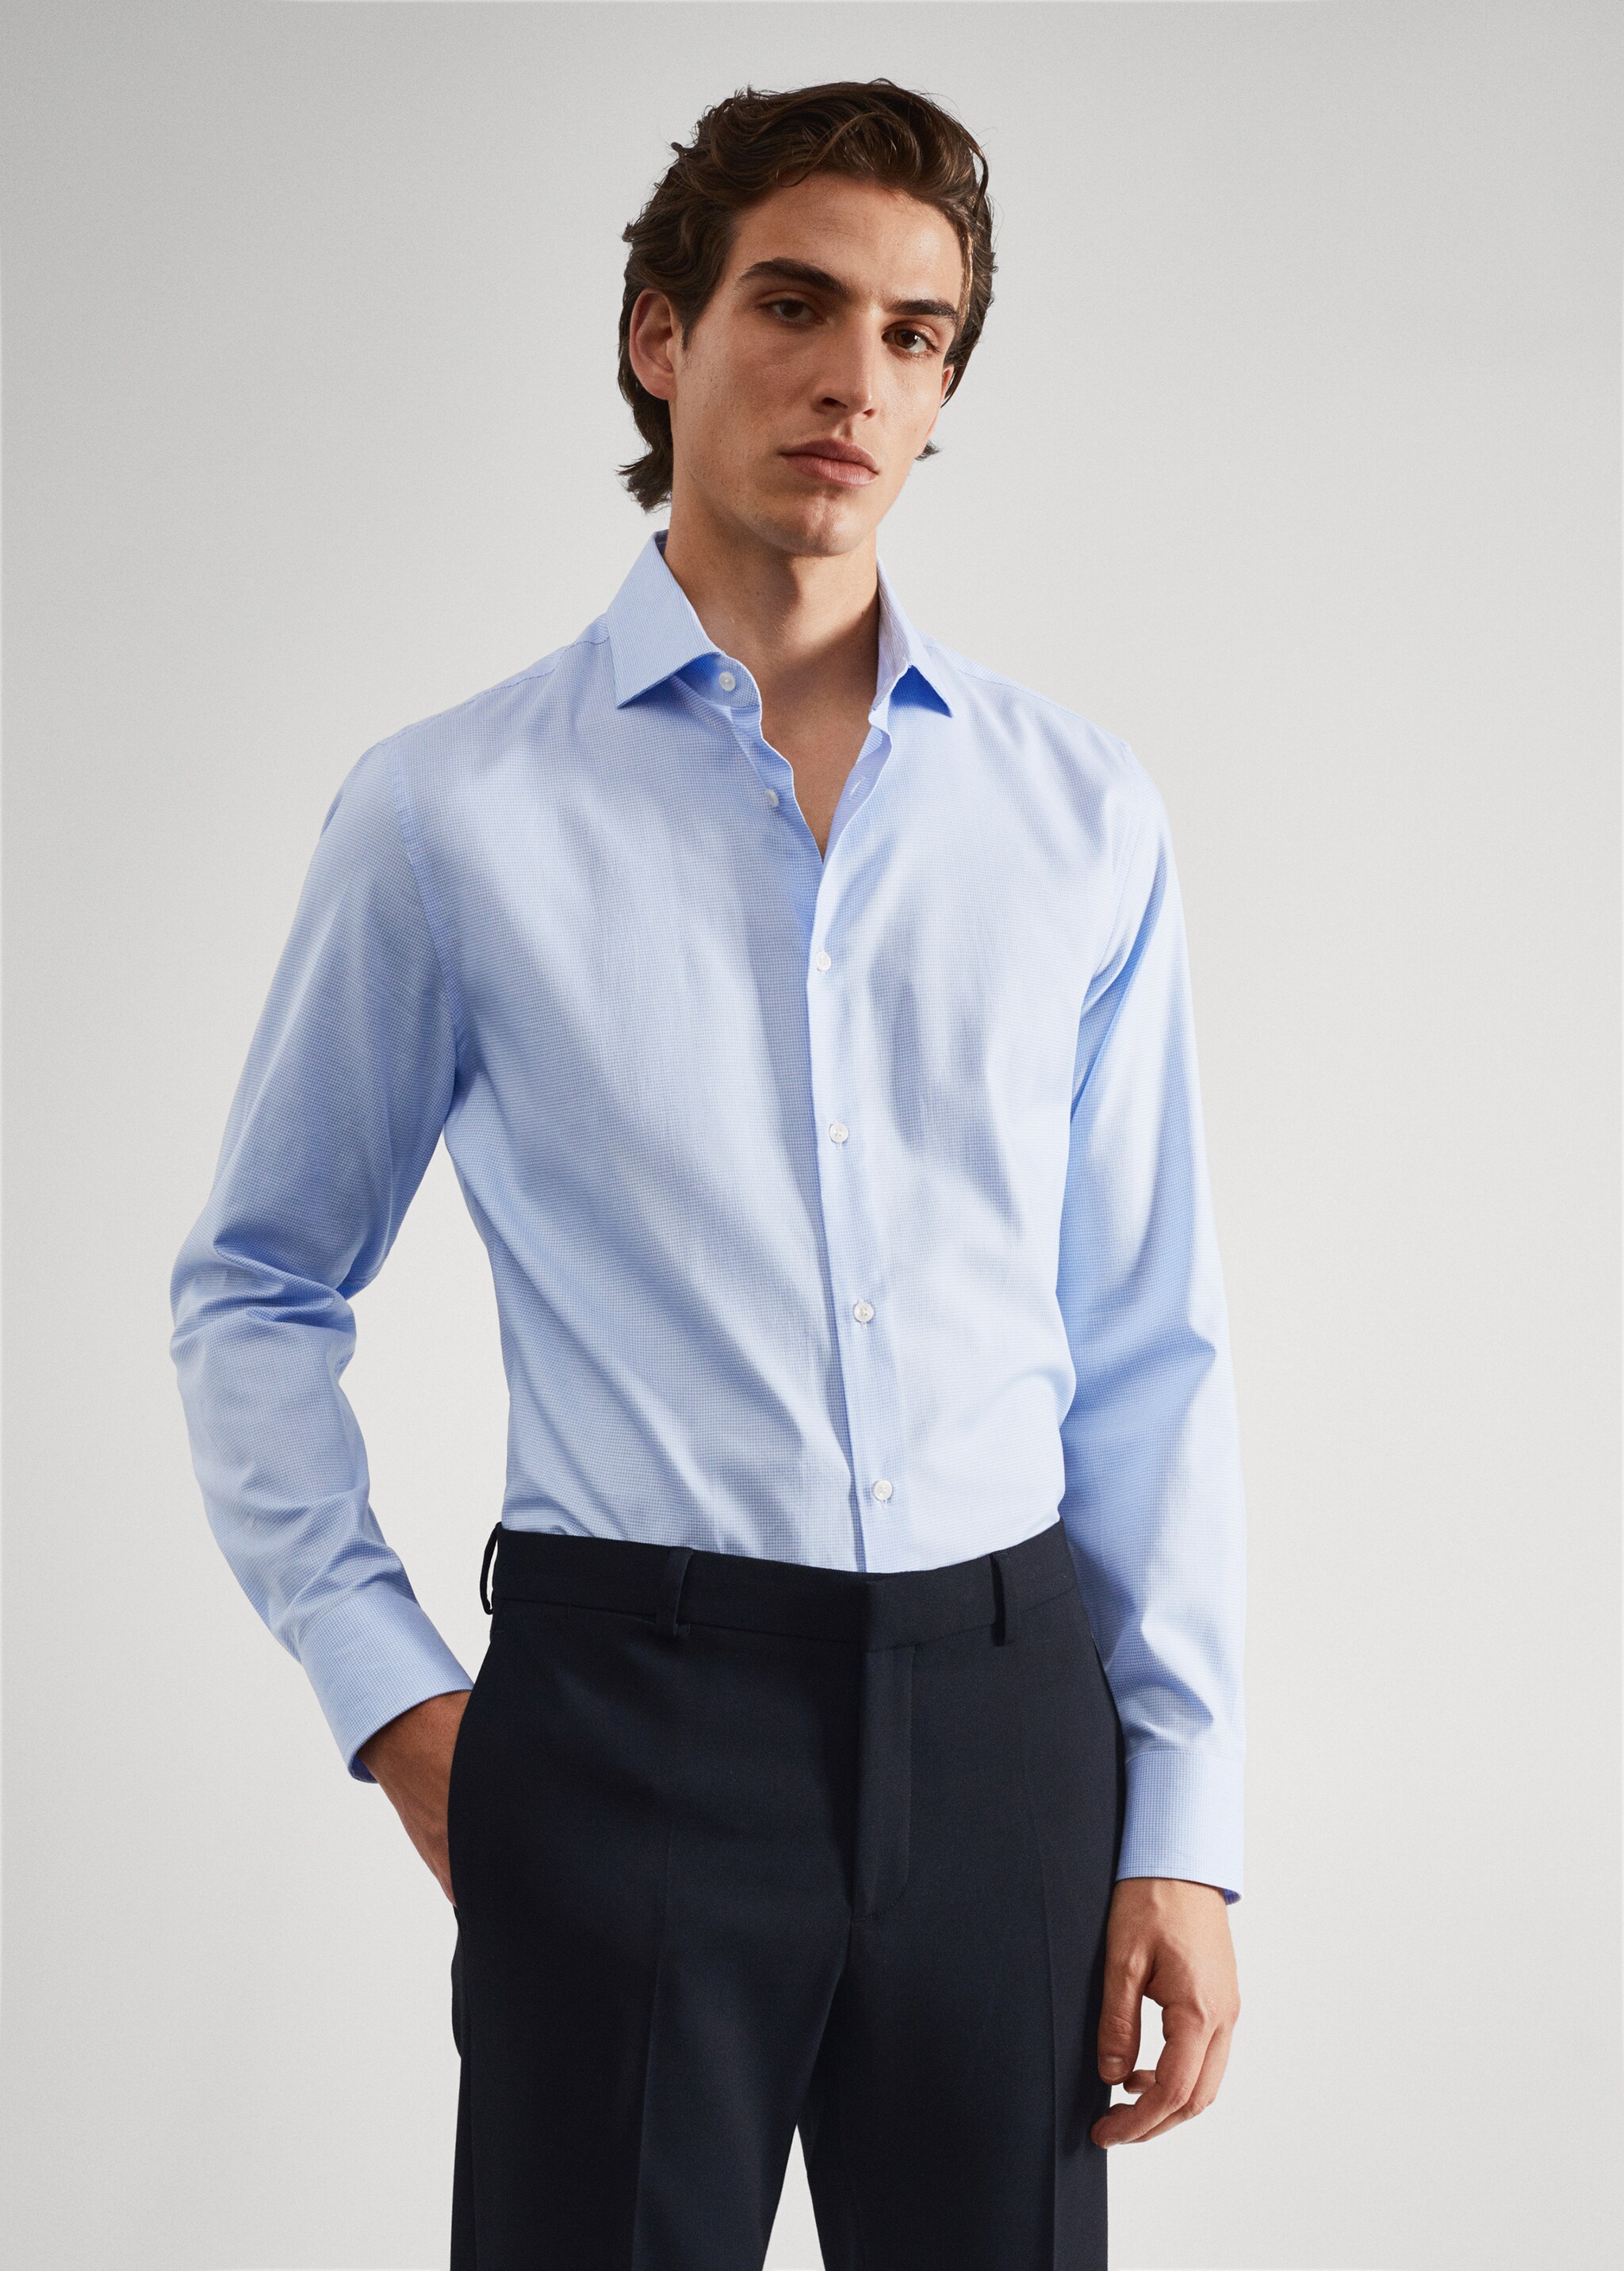 Micro-structure slim-fit suit shirt - Medium plane